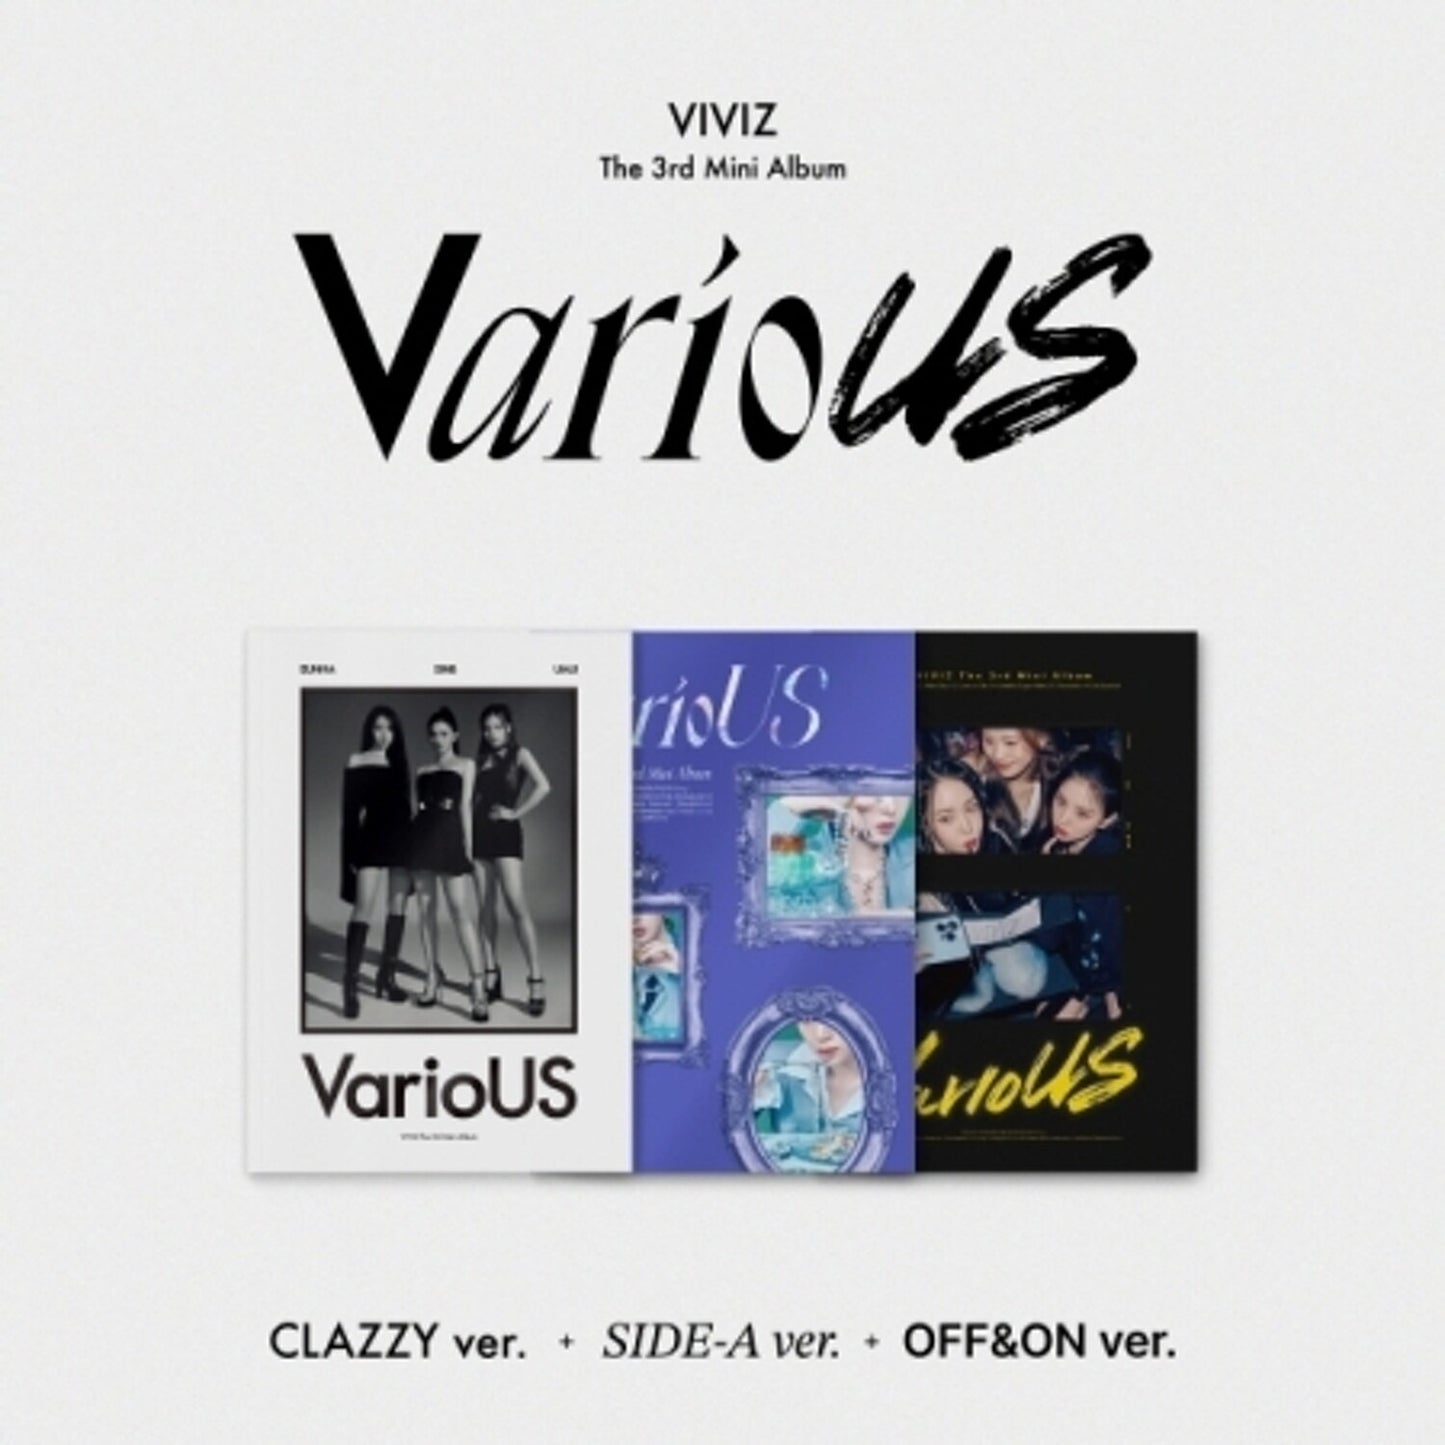 VIVIZ - VARIOUS (3RD MINI ALBUM) PHOTOBOOK (3 VERSIONS)